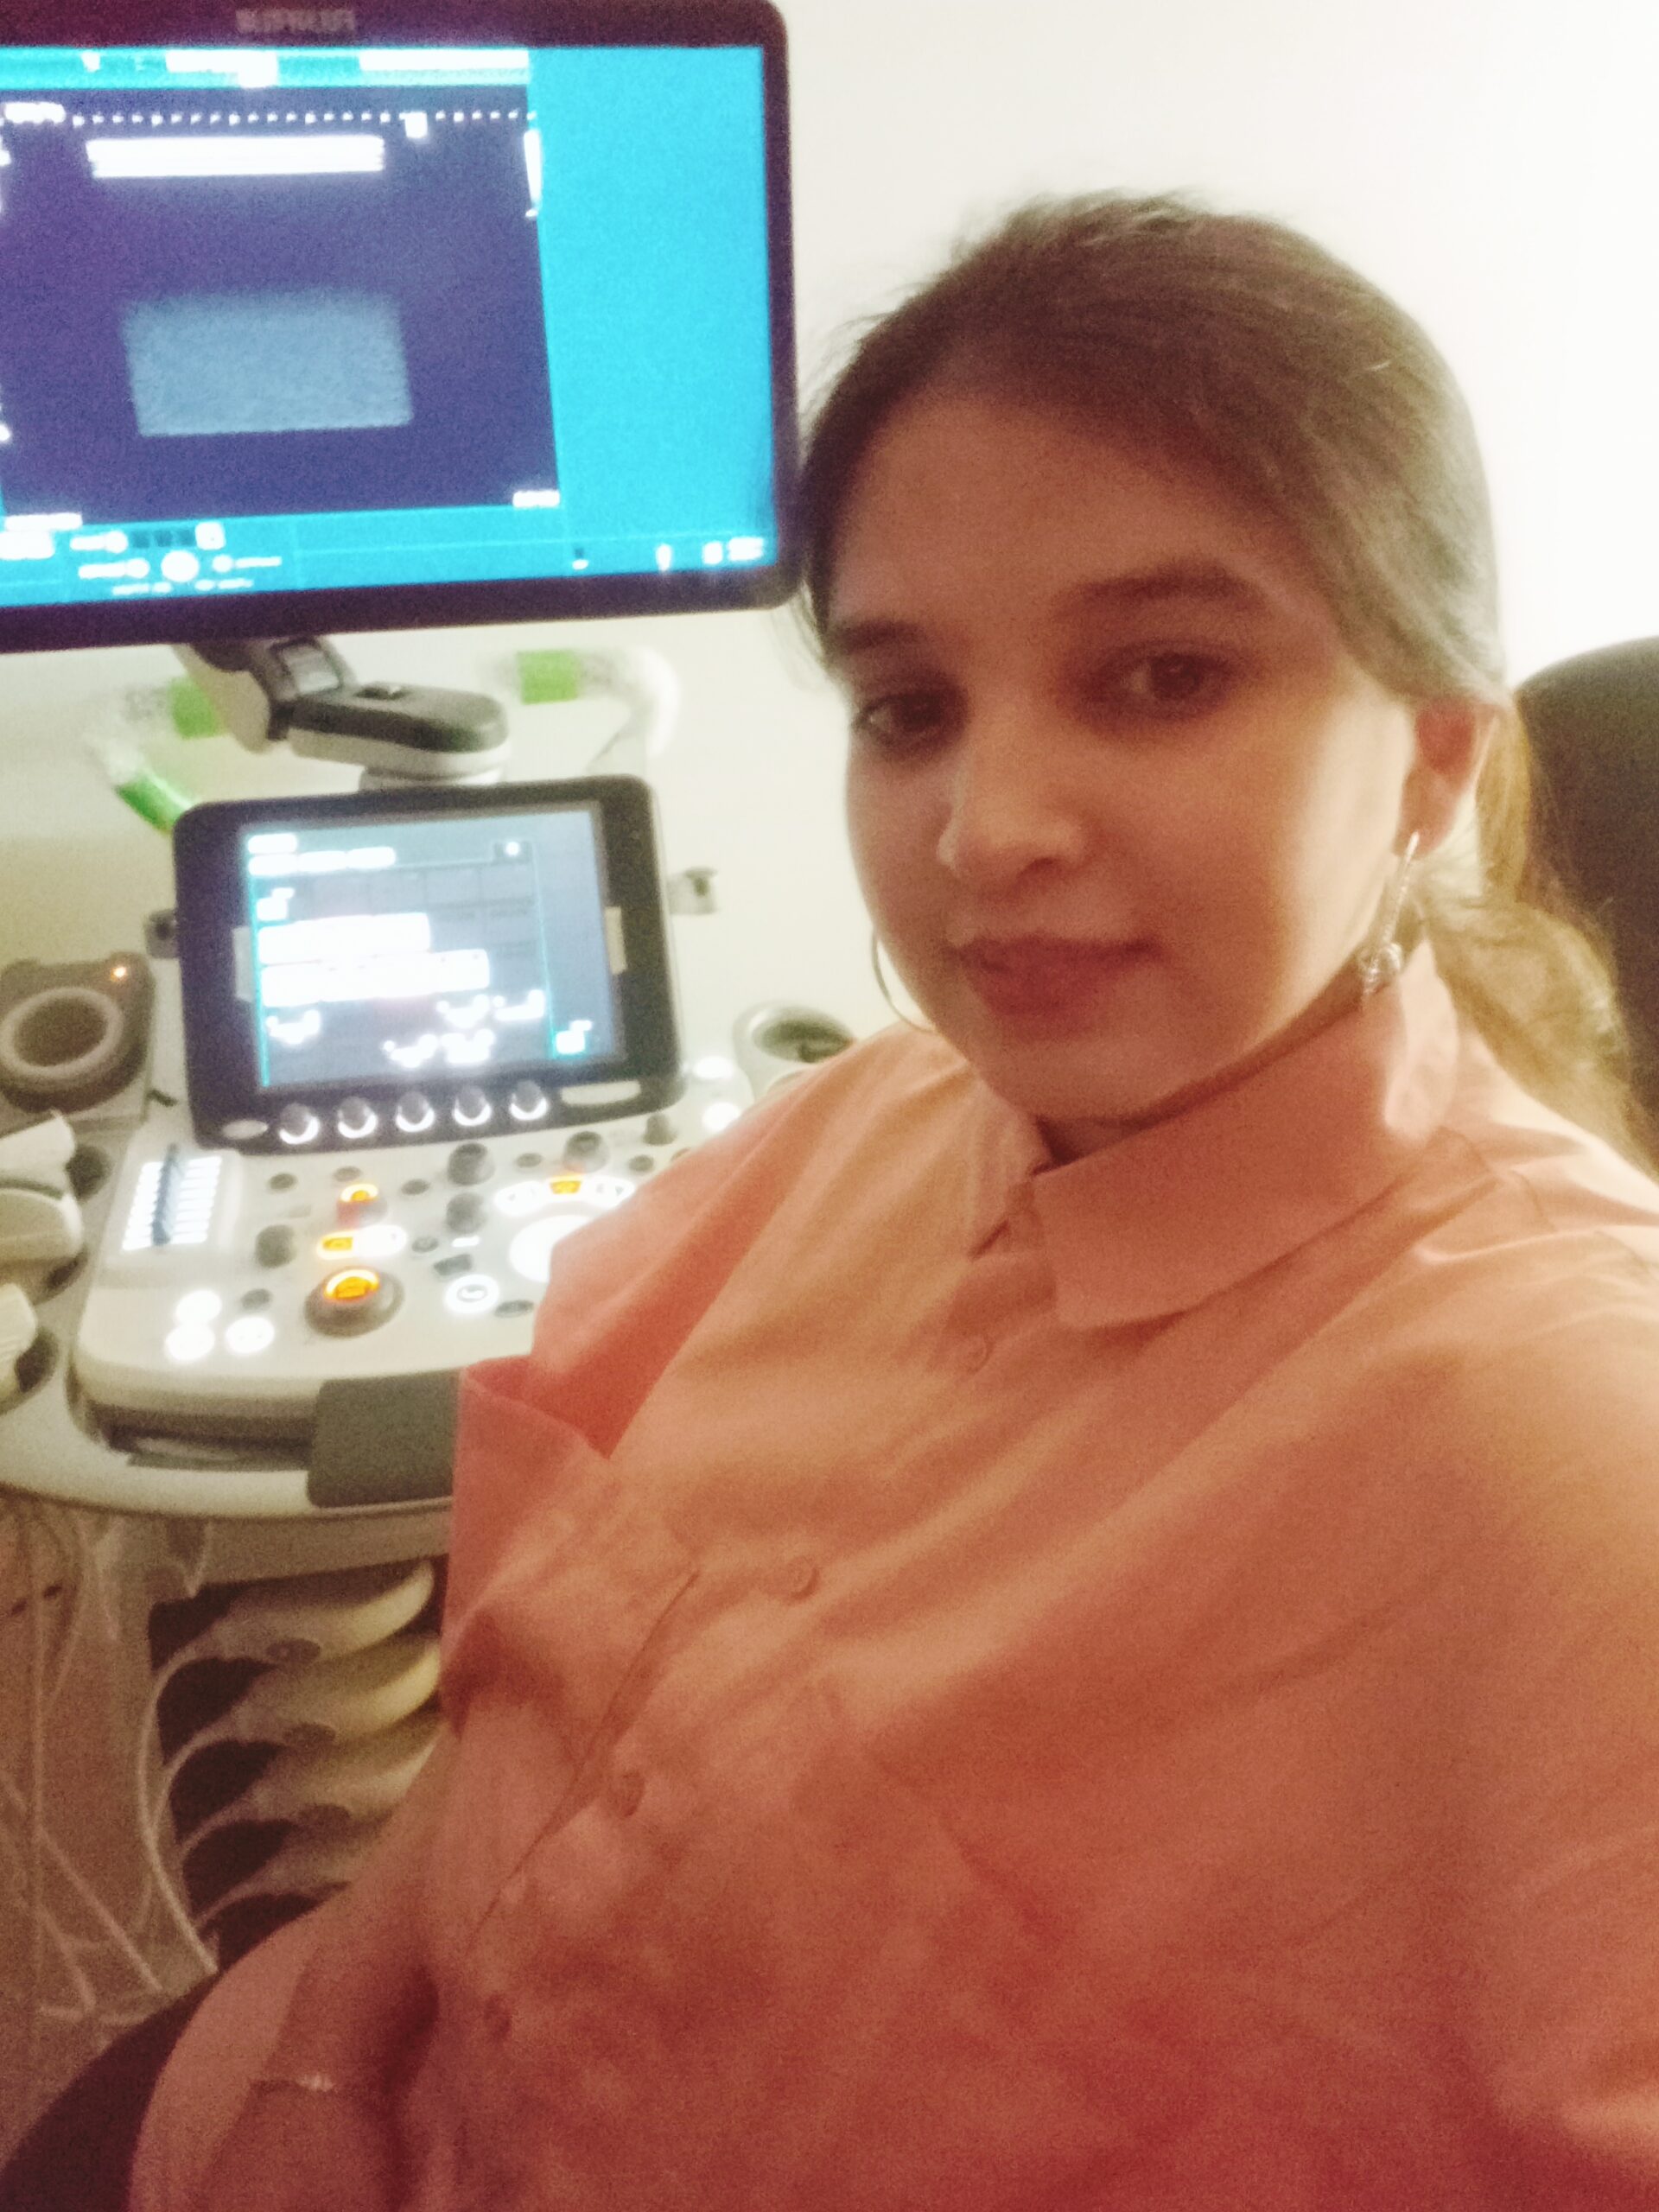 Syeda Ghazia FUJIFILM at scanner working as a woman medical equipment engineer